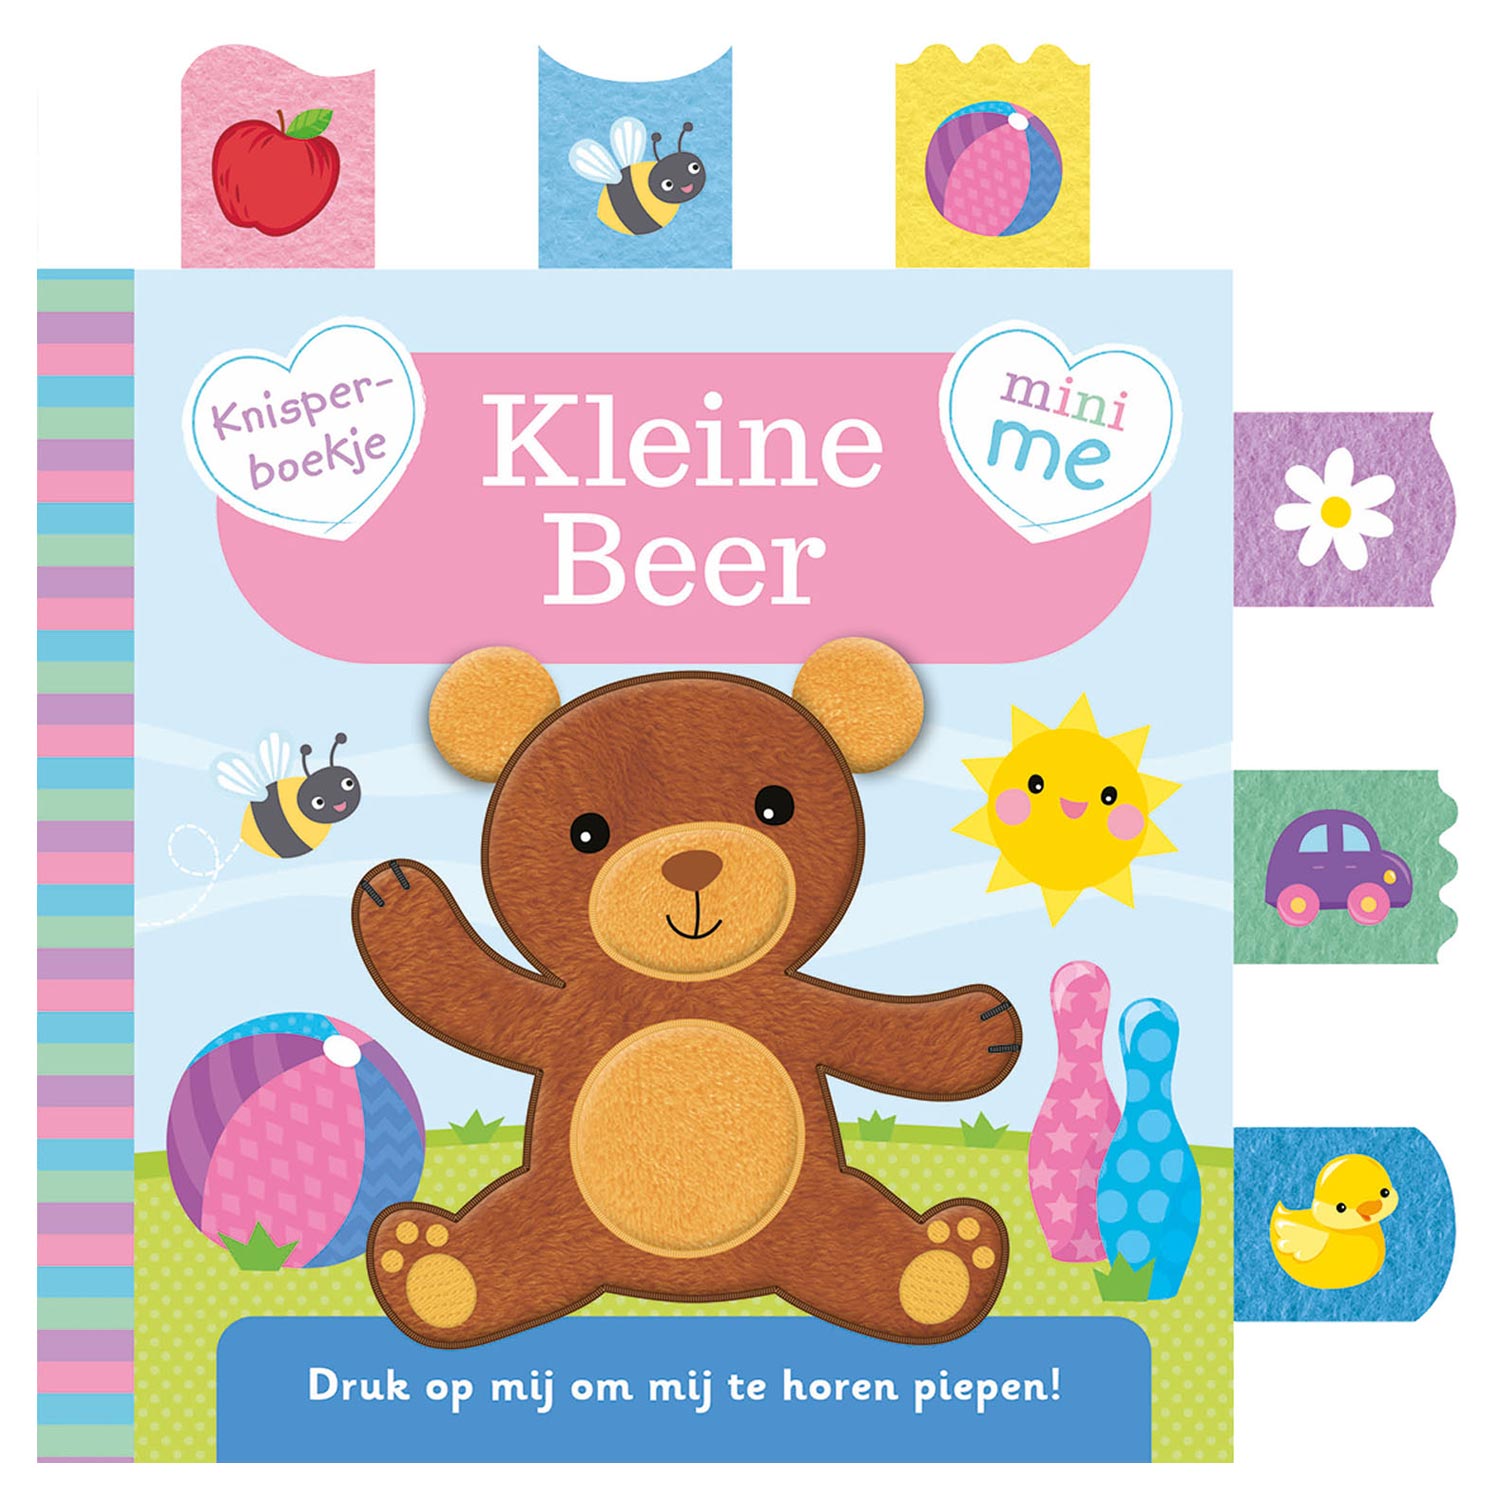 Knisperboekje Mini Me - Kleine Beer